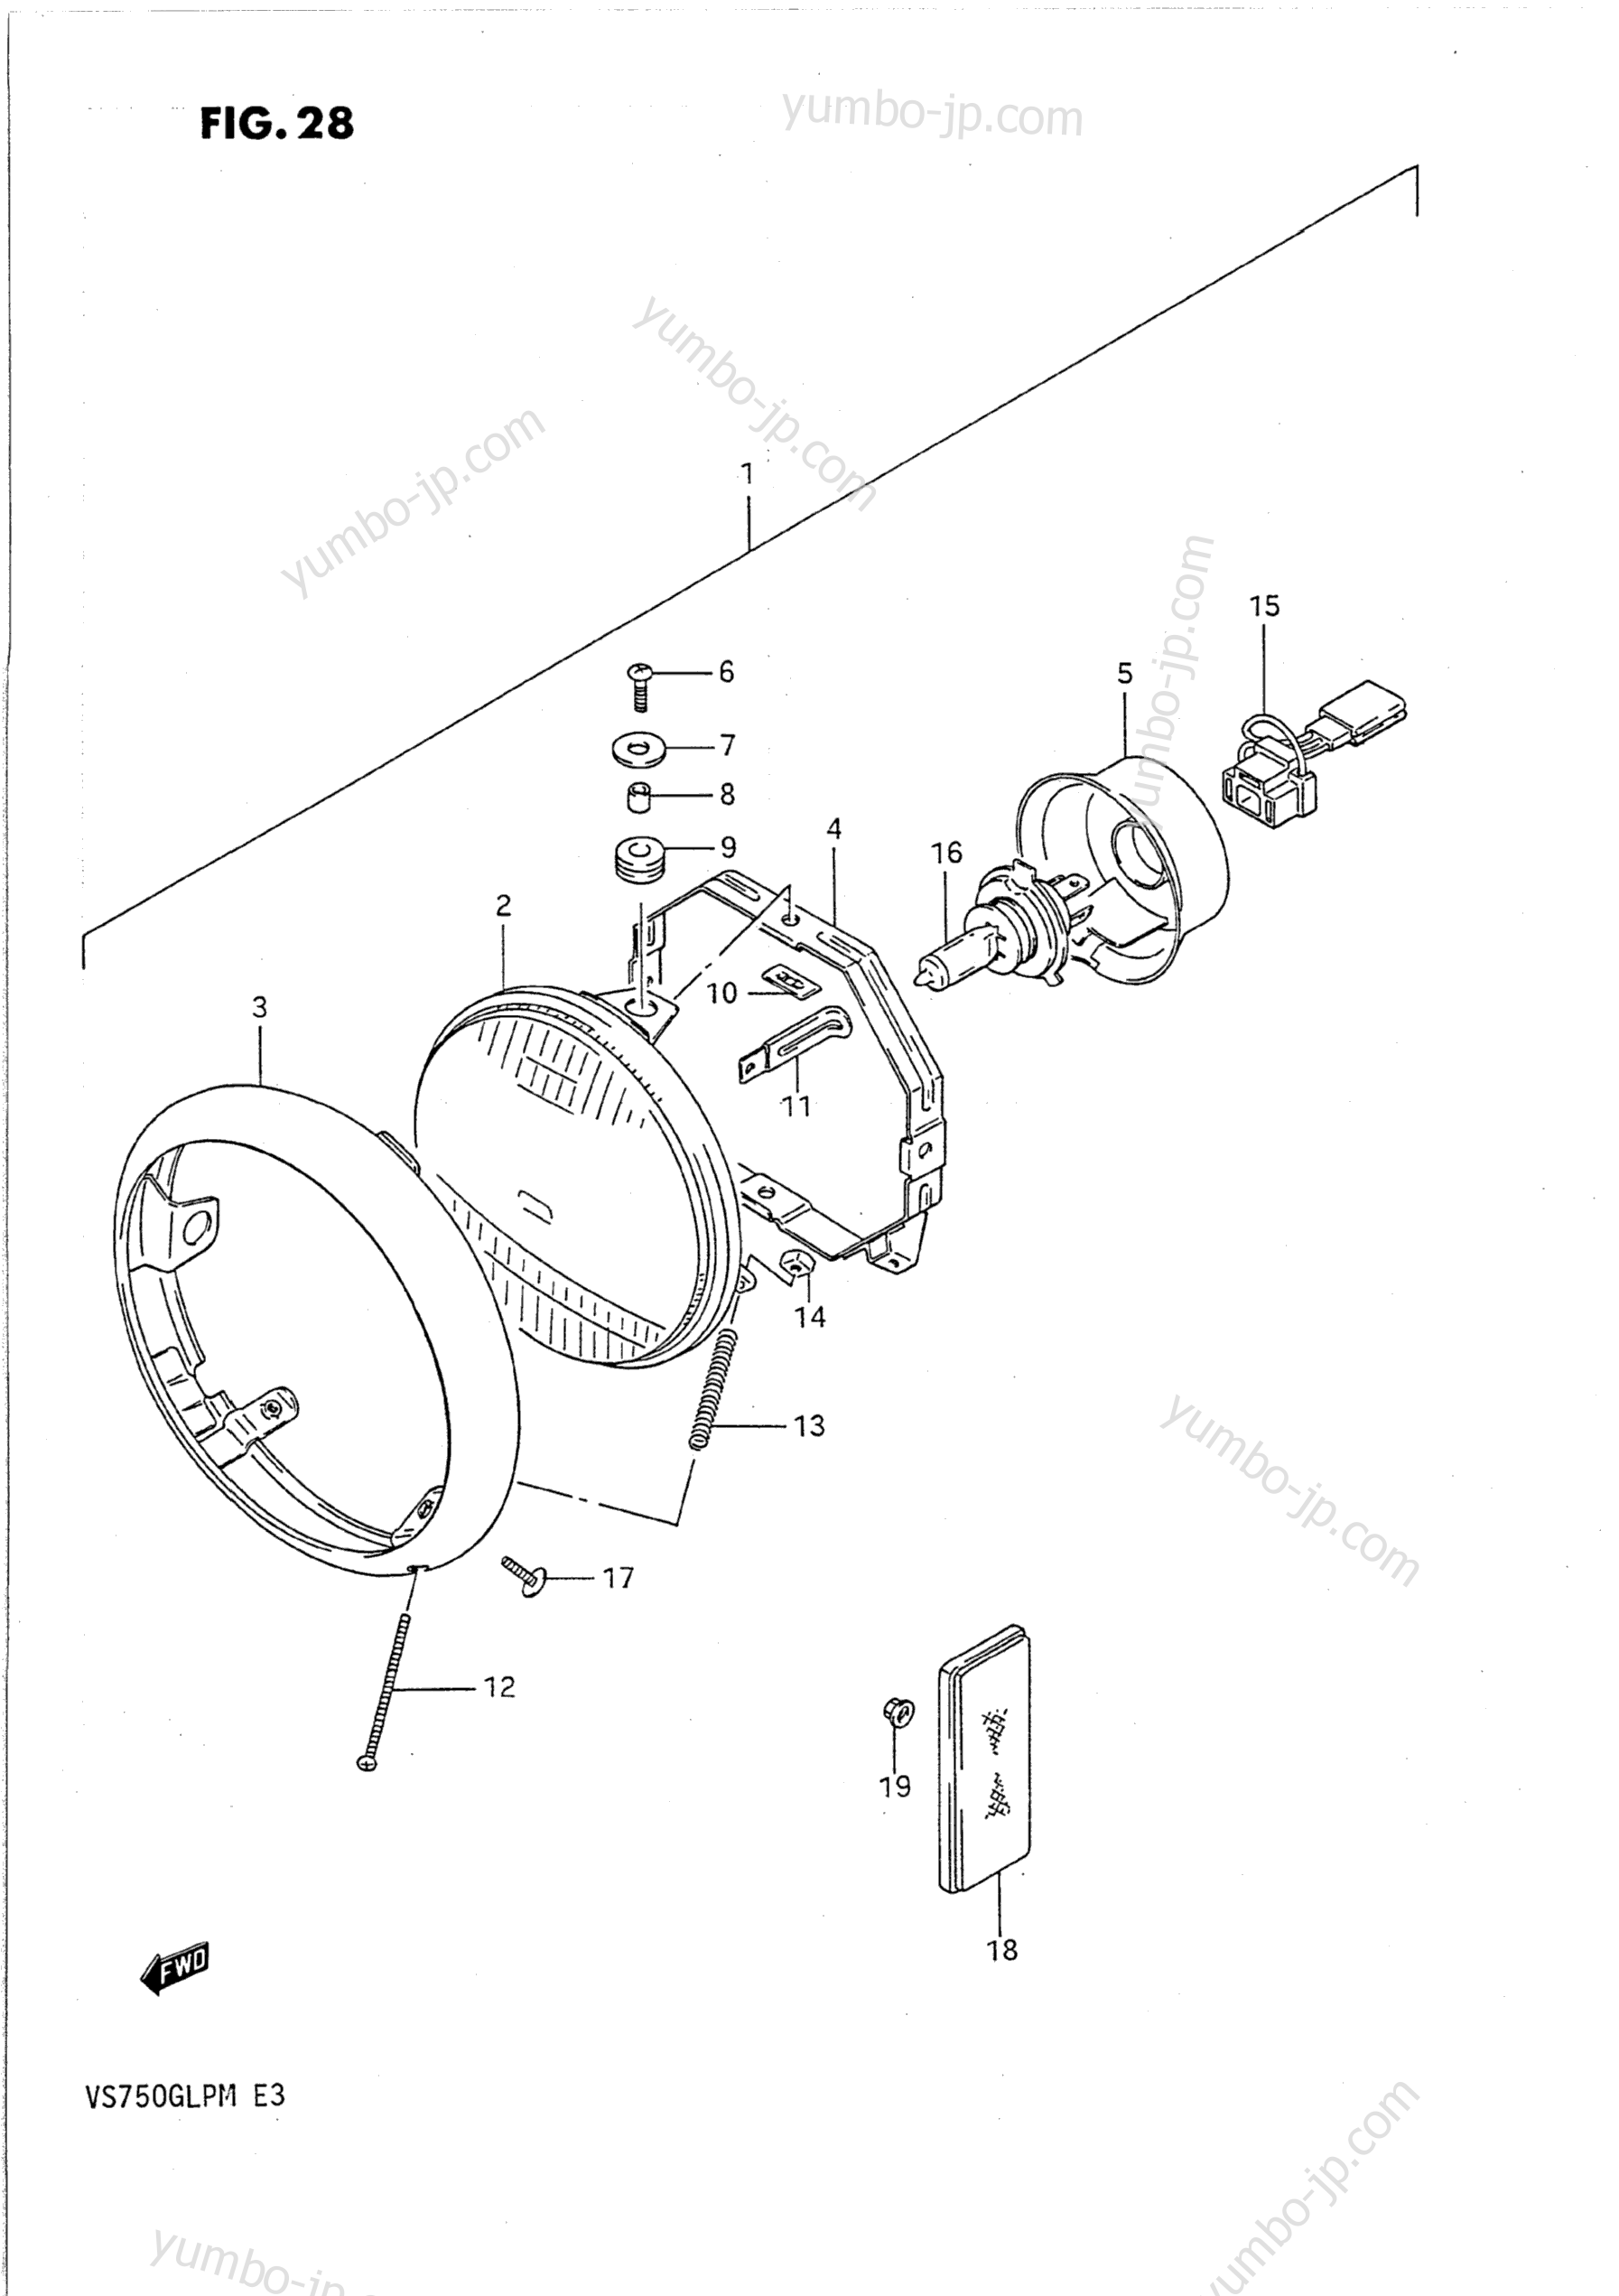 HEADLAMP for motorcycles SUZUKI Intruder (VS750GLP) 1988 year